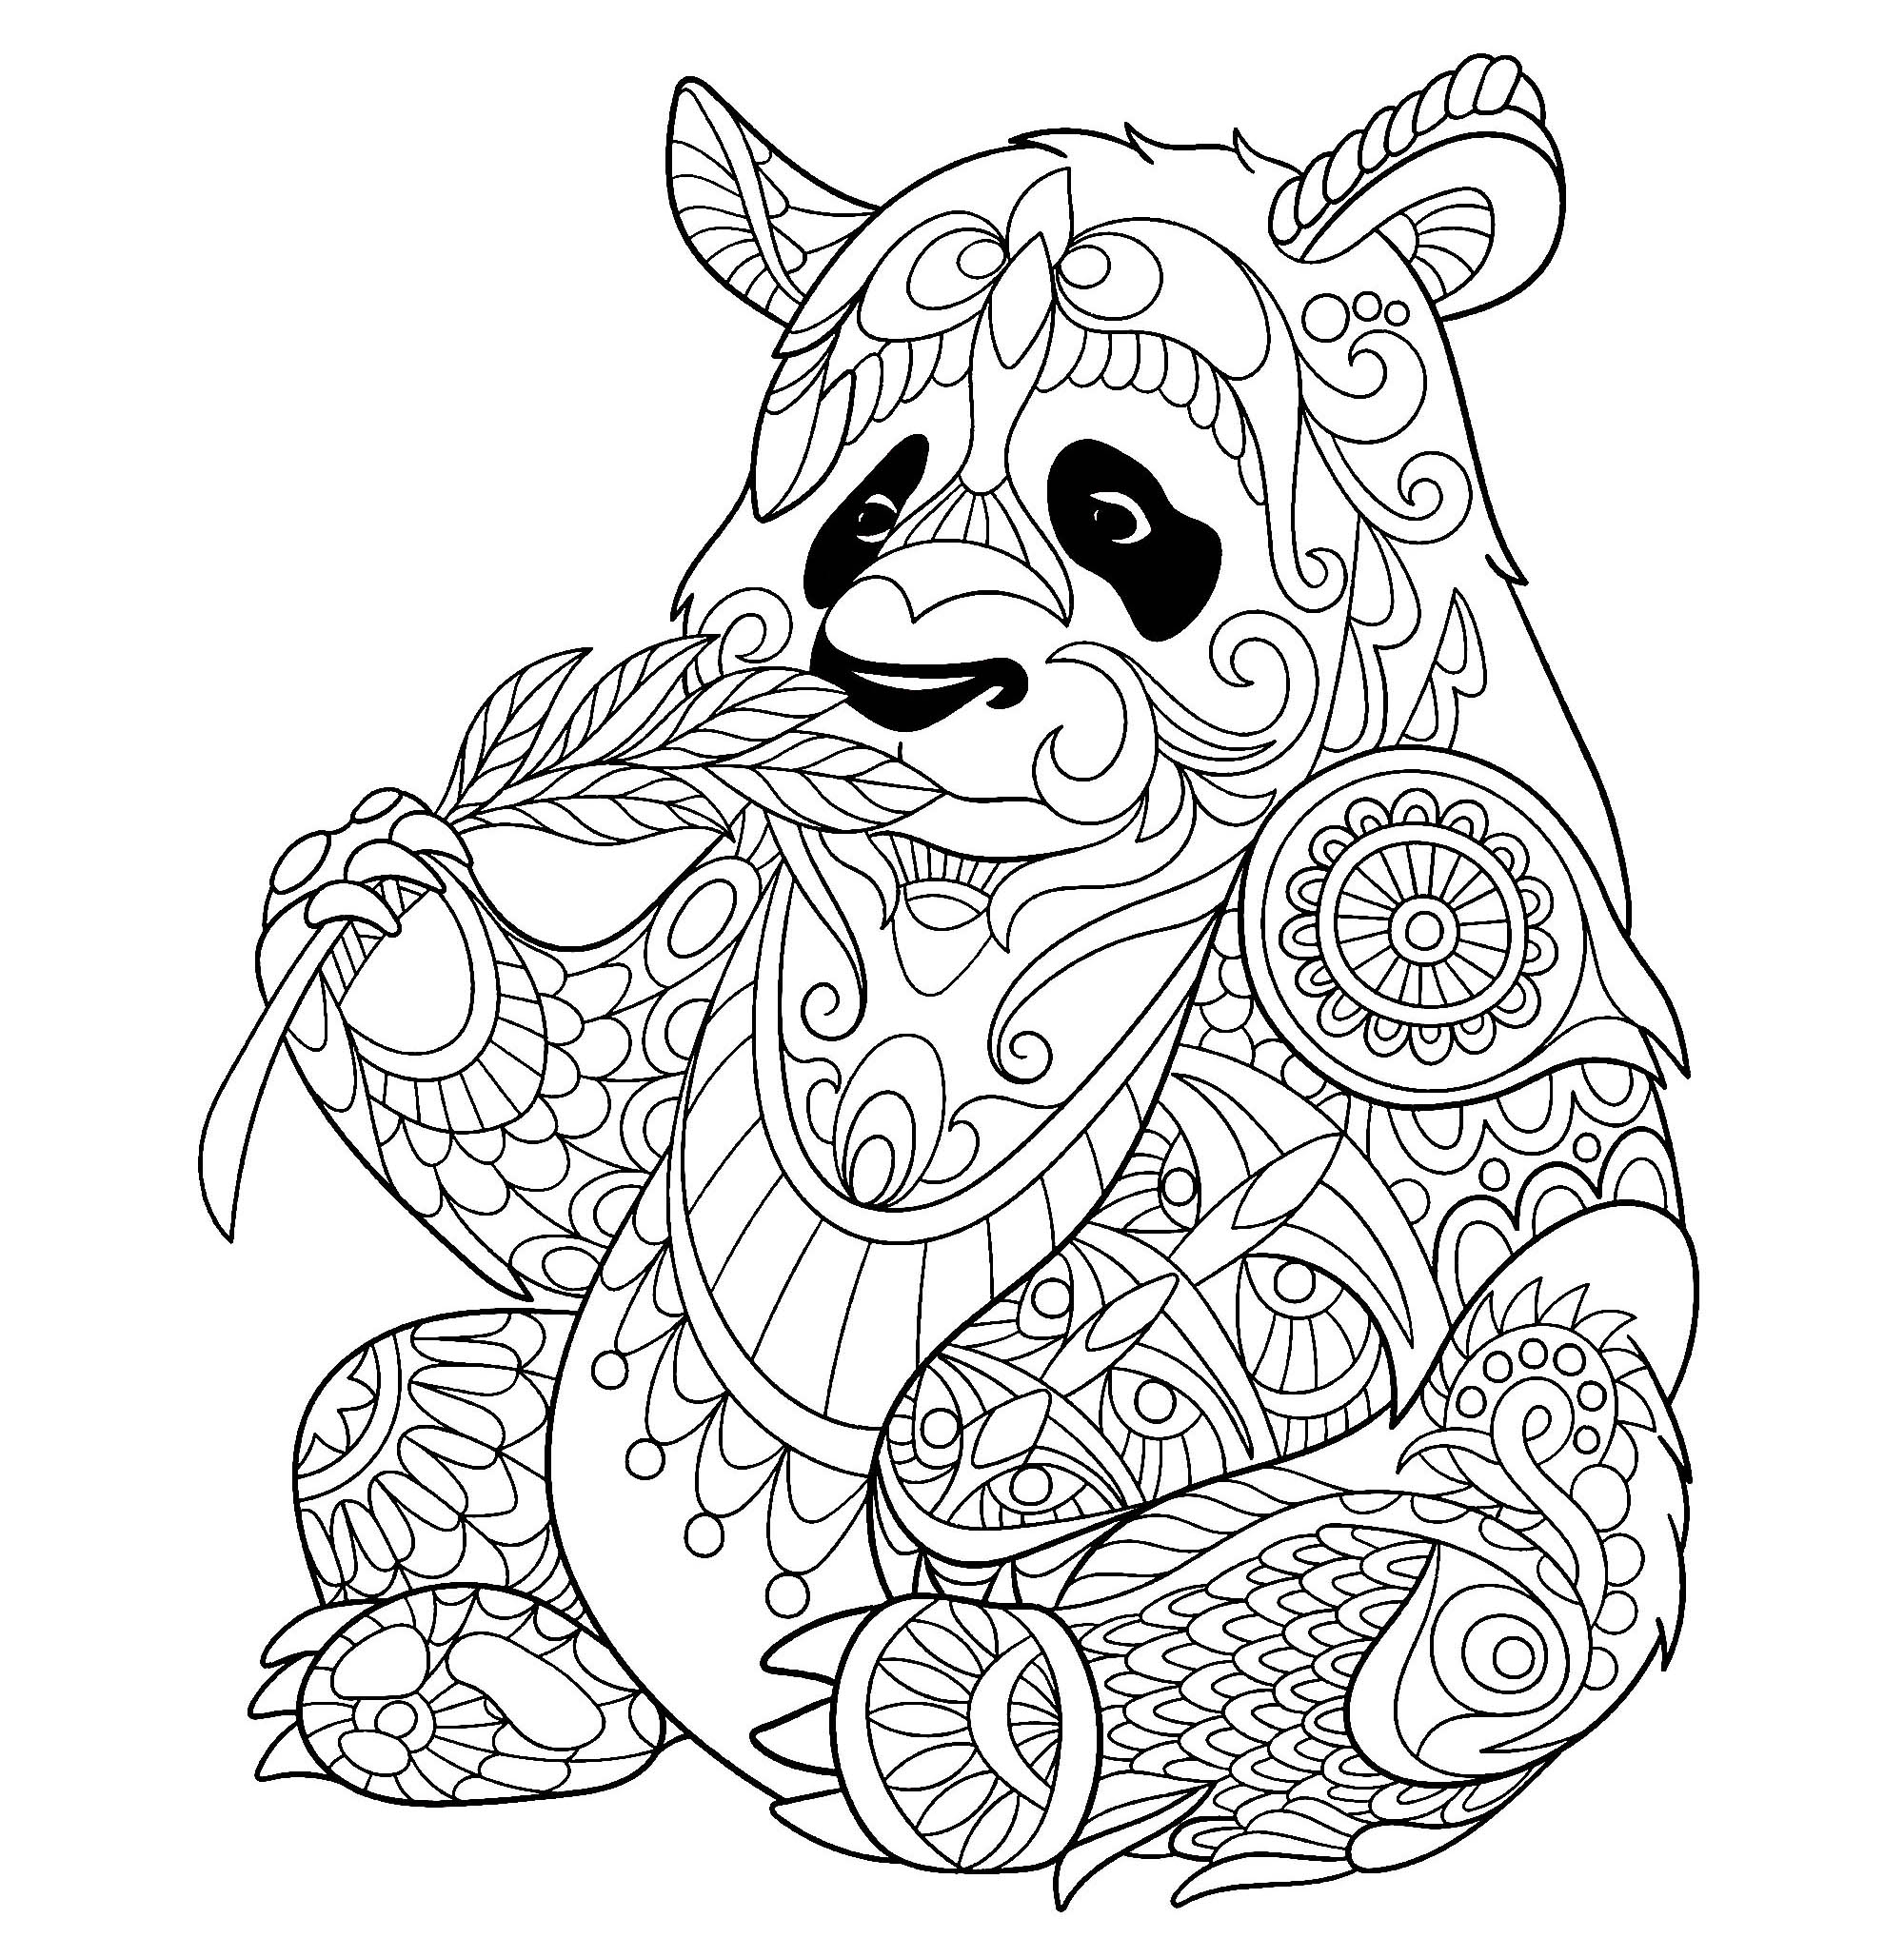 Malbuch Fur Erwachsene  : Panda - 1, Quelle : 123rf   Künstler : Sybirko